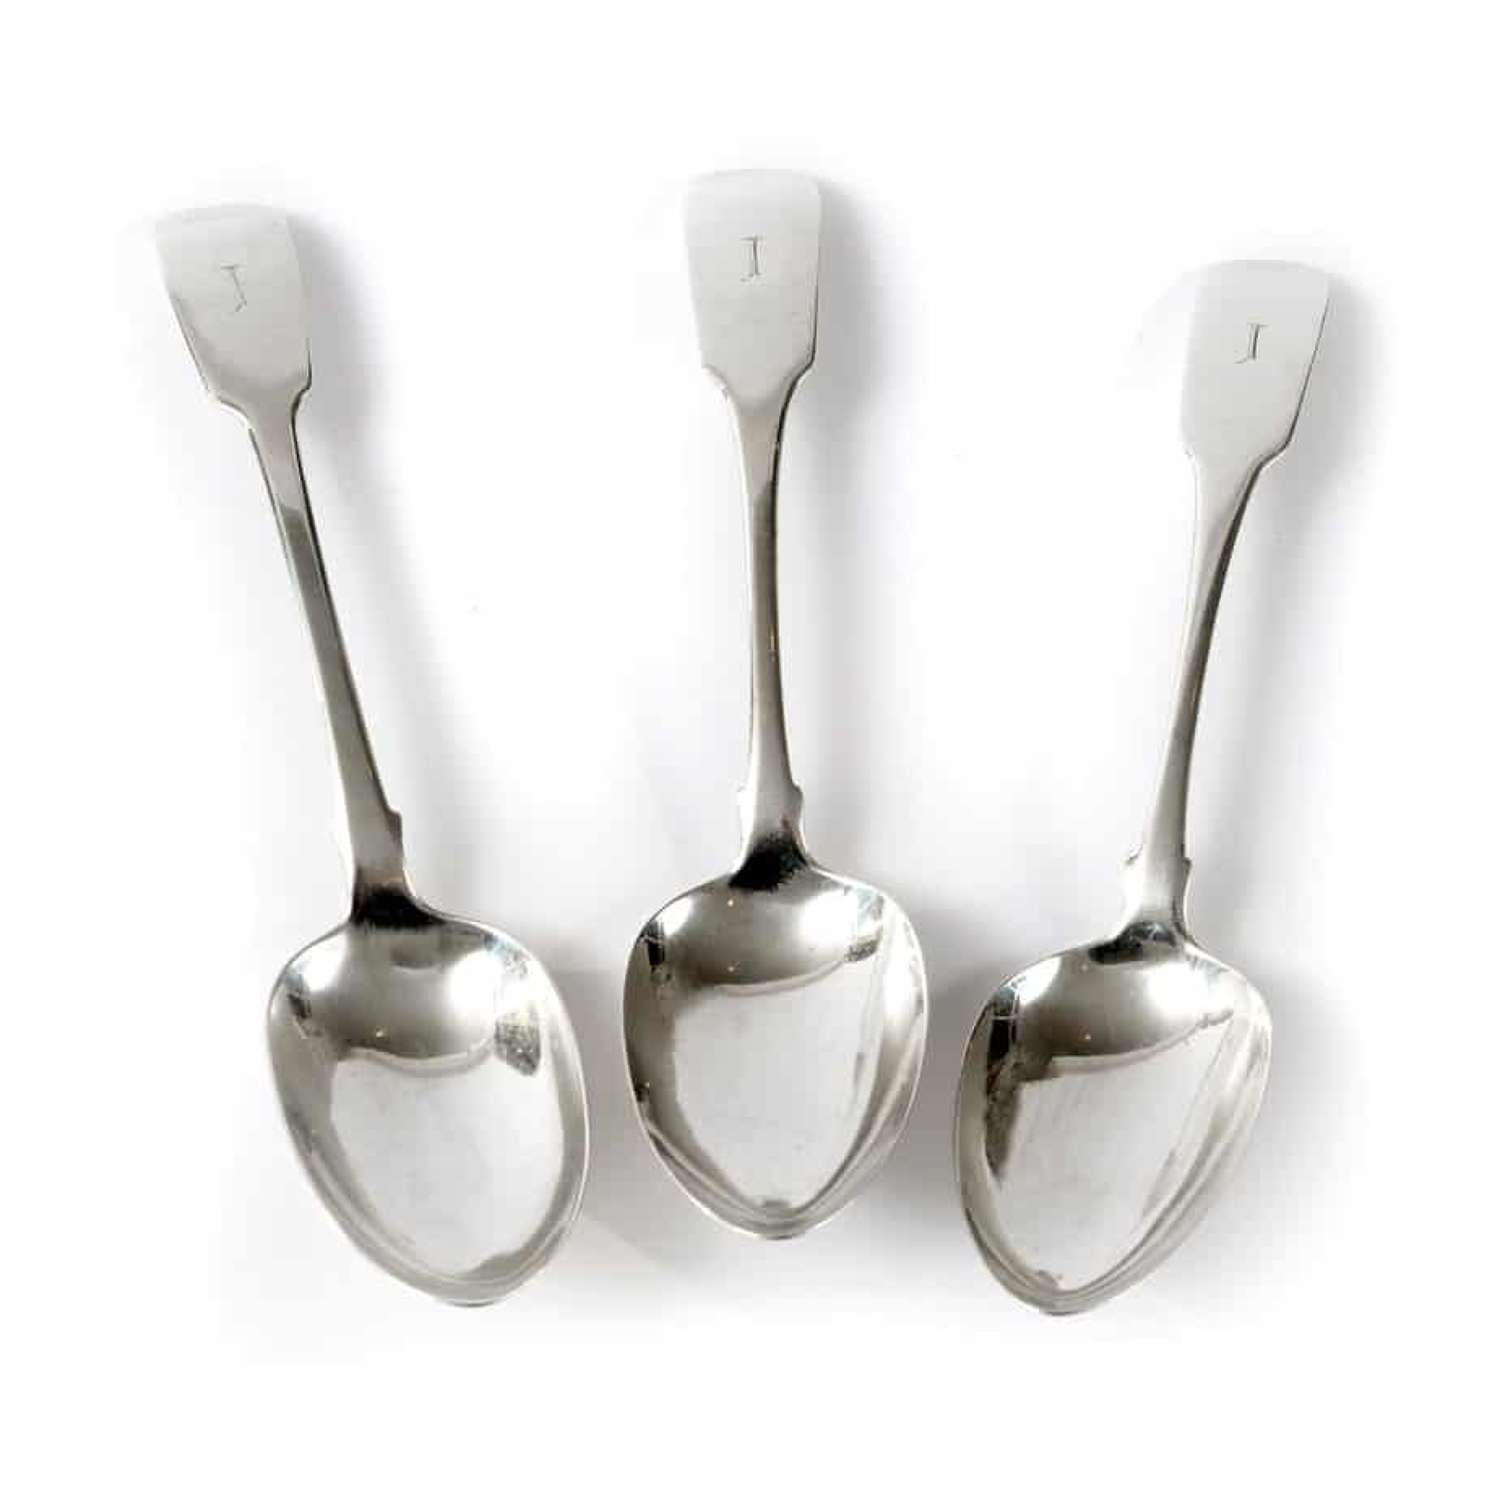 3 Irish silver spoons - by Richard Whitford & Philip Weekes